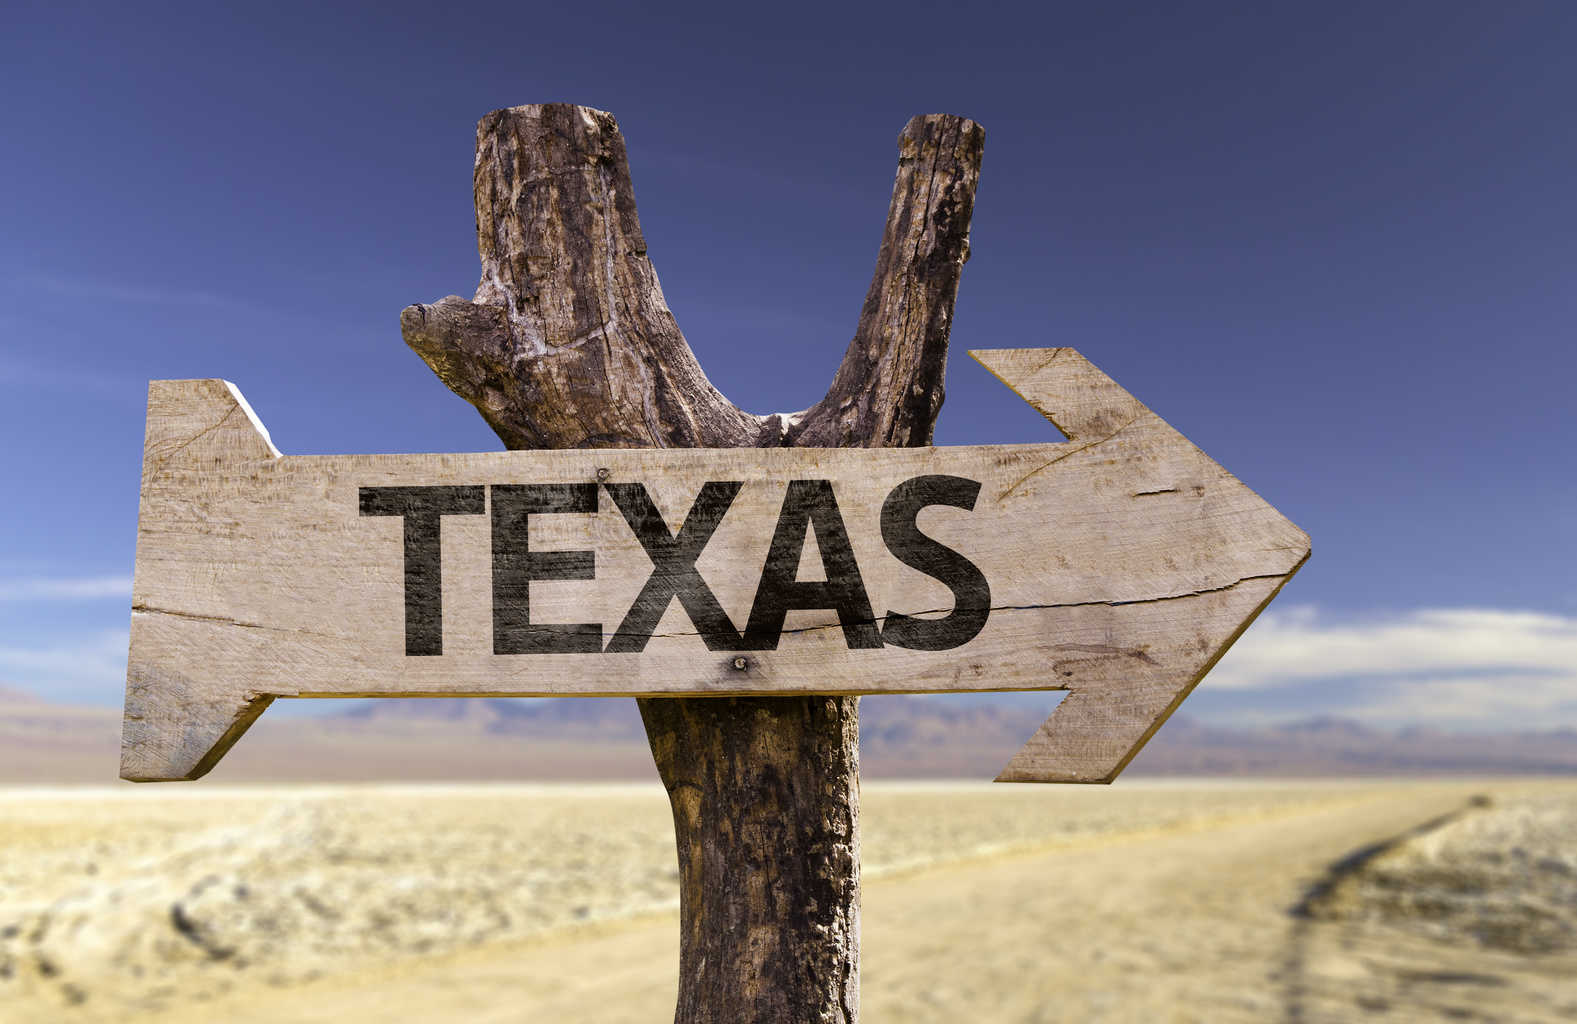 Texas: The Land of Plenty